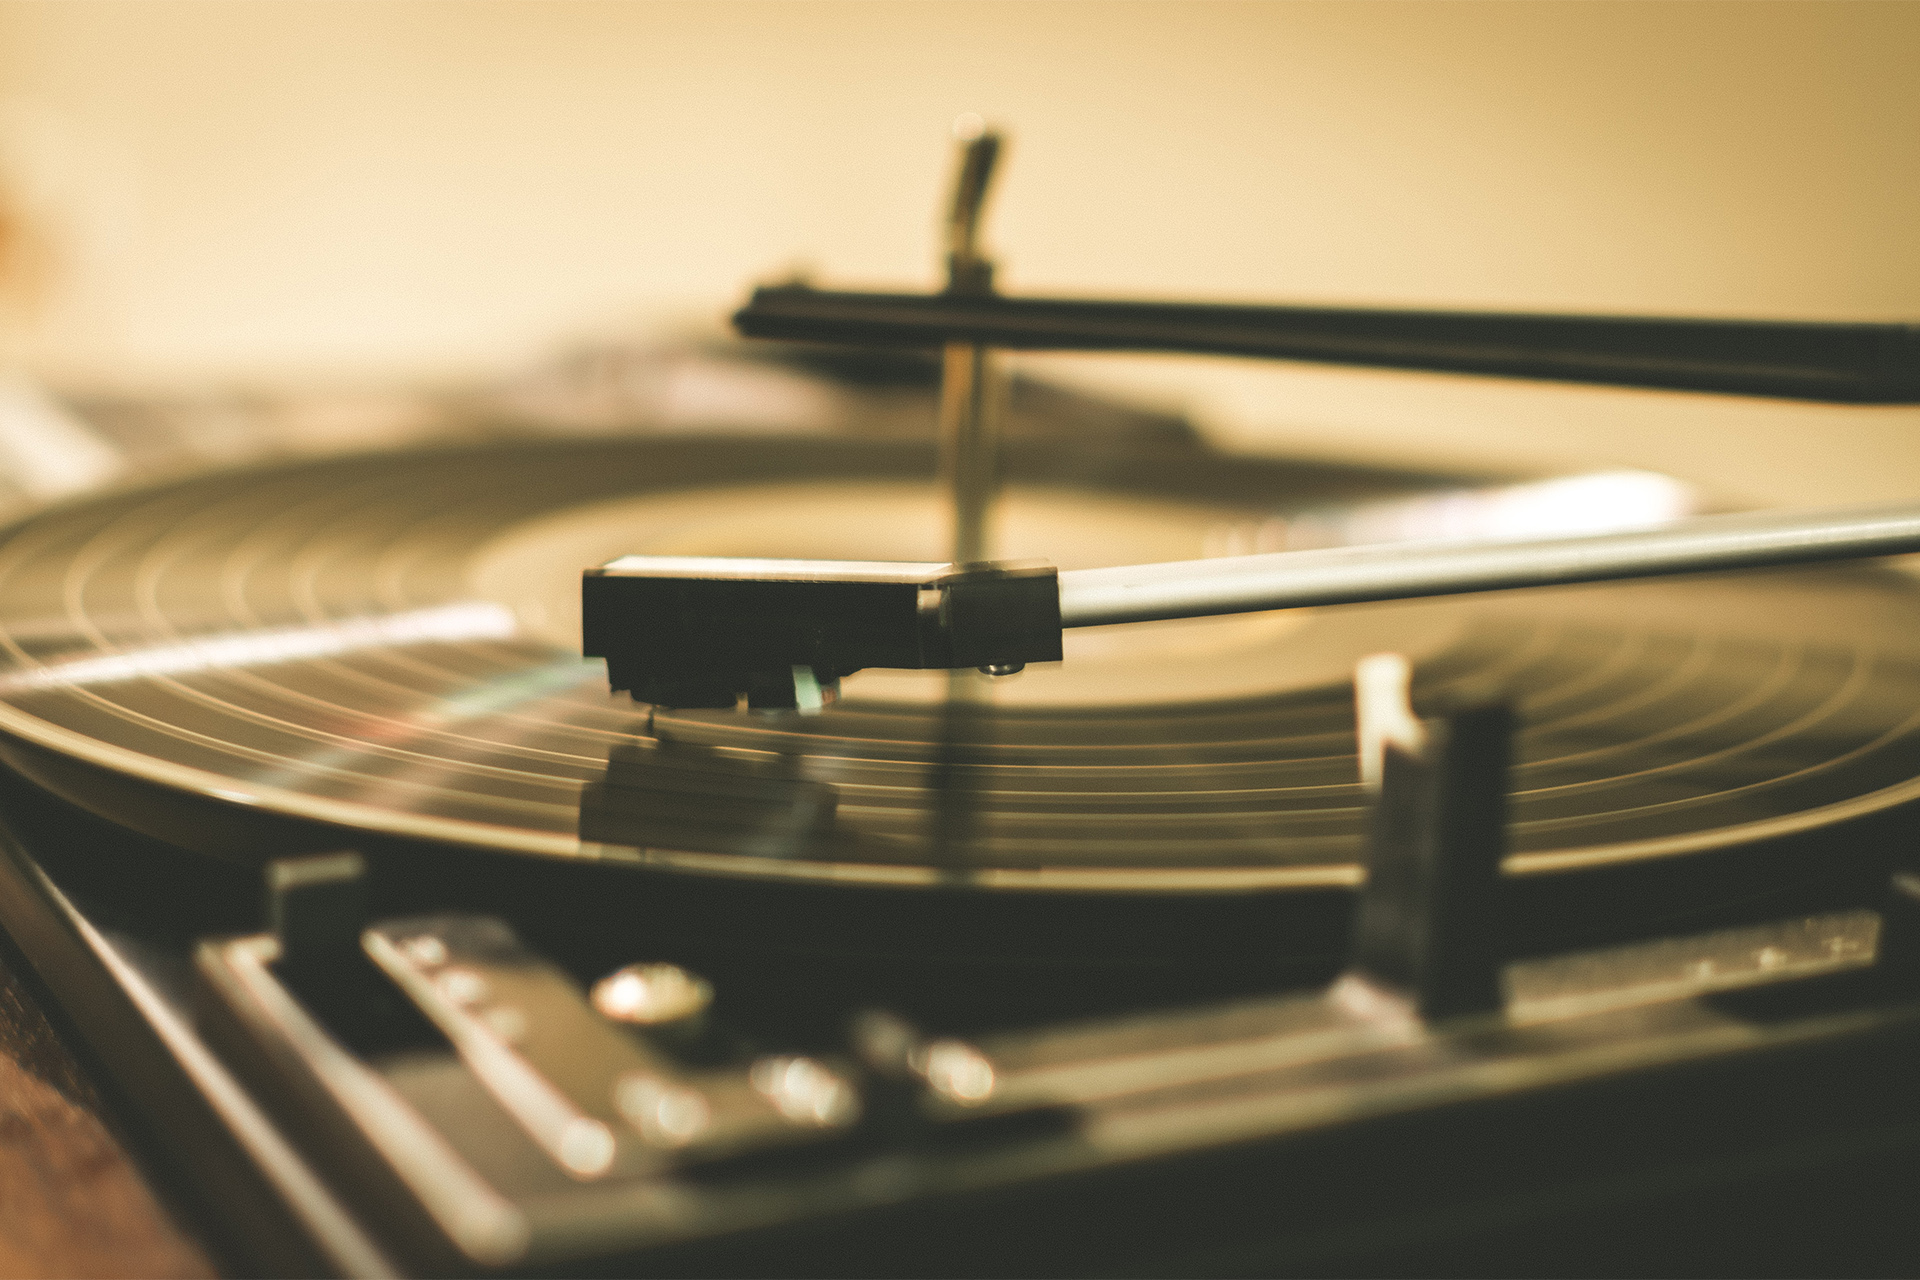 Vinyl recorder by Jace & Afsoon on Unsplash